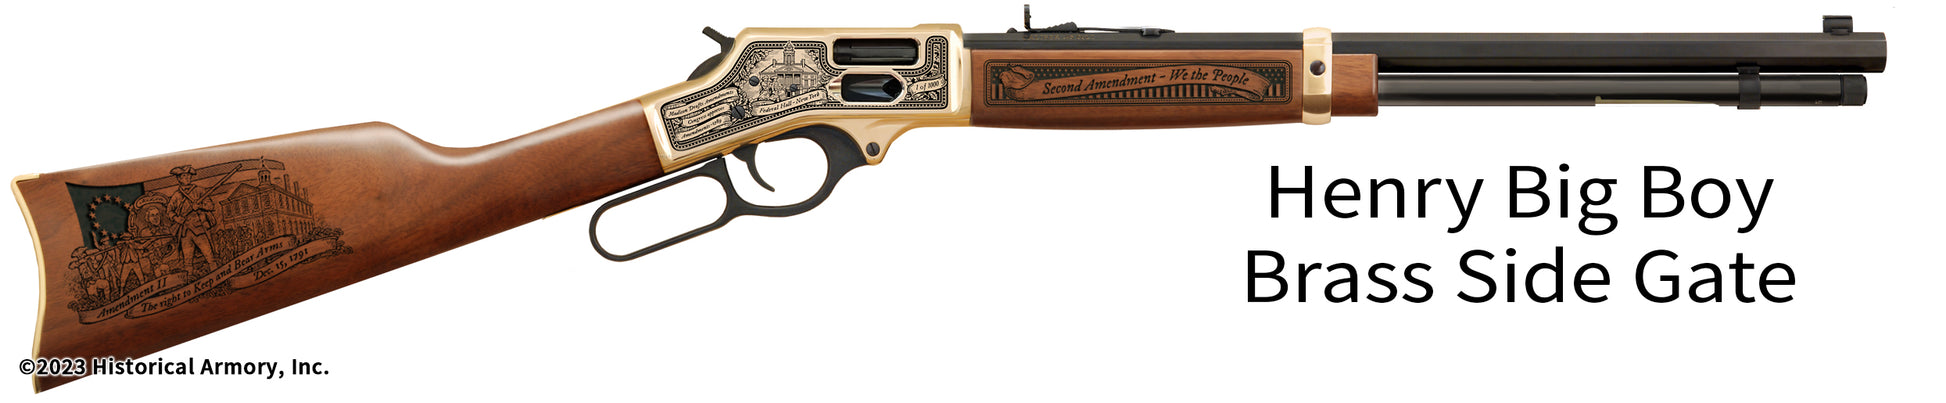 2nd Amendment Limited Edition Henry Big Boy Brass Side Gate Engraved Rifle